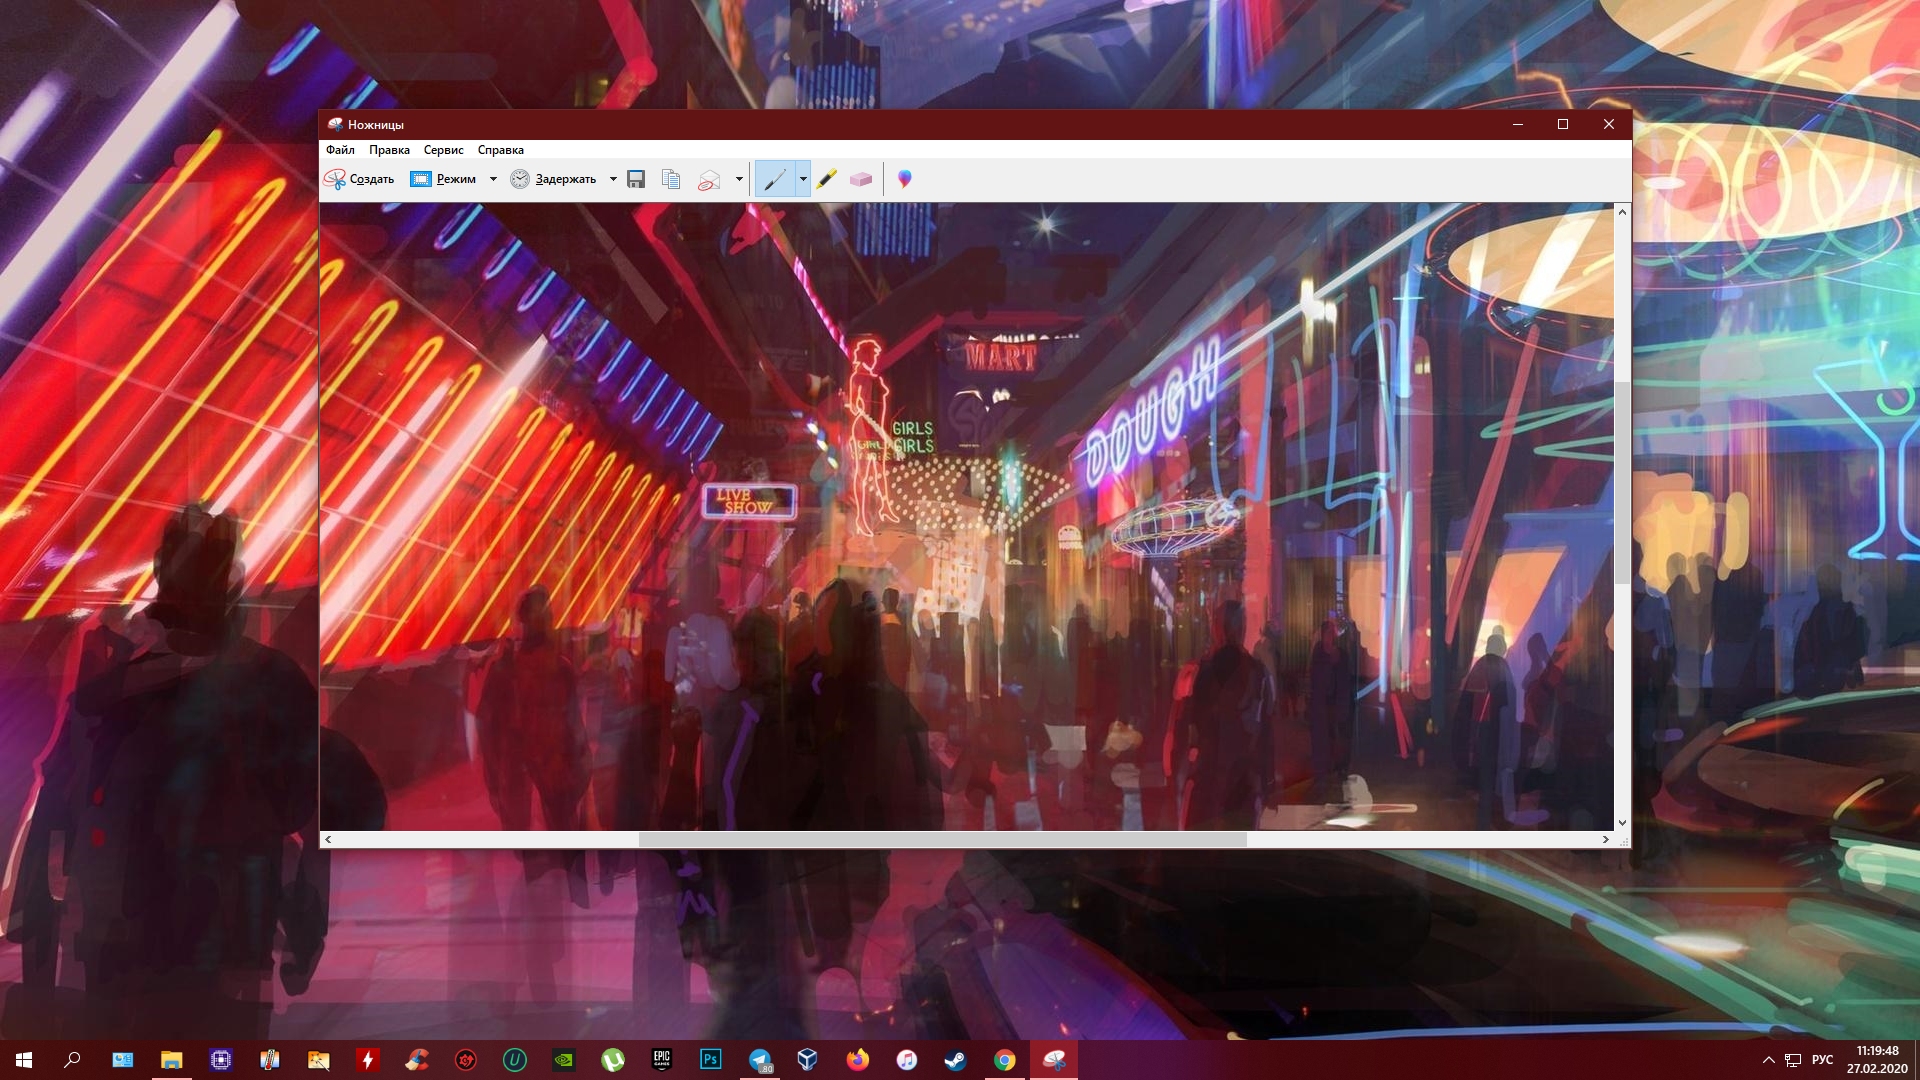 Создание скриншота на планшете с Windows 10